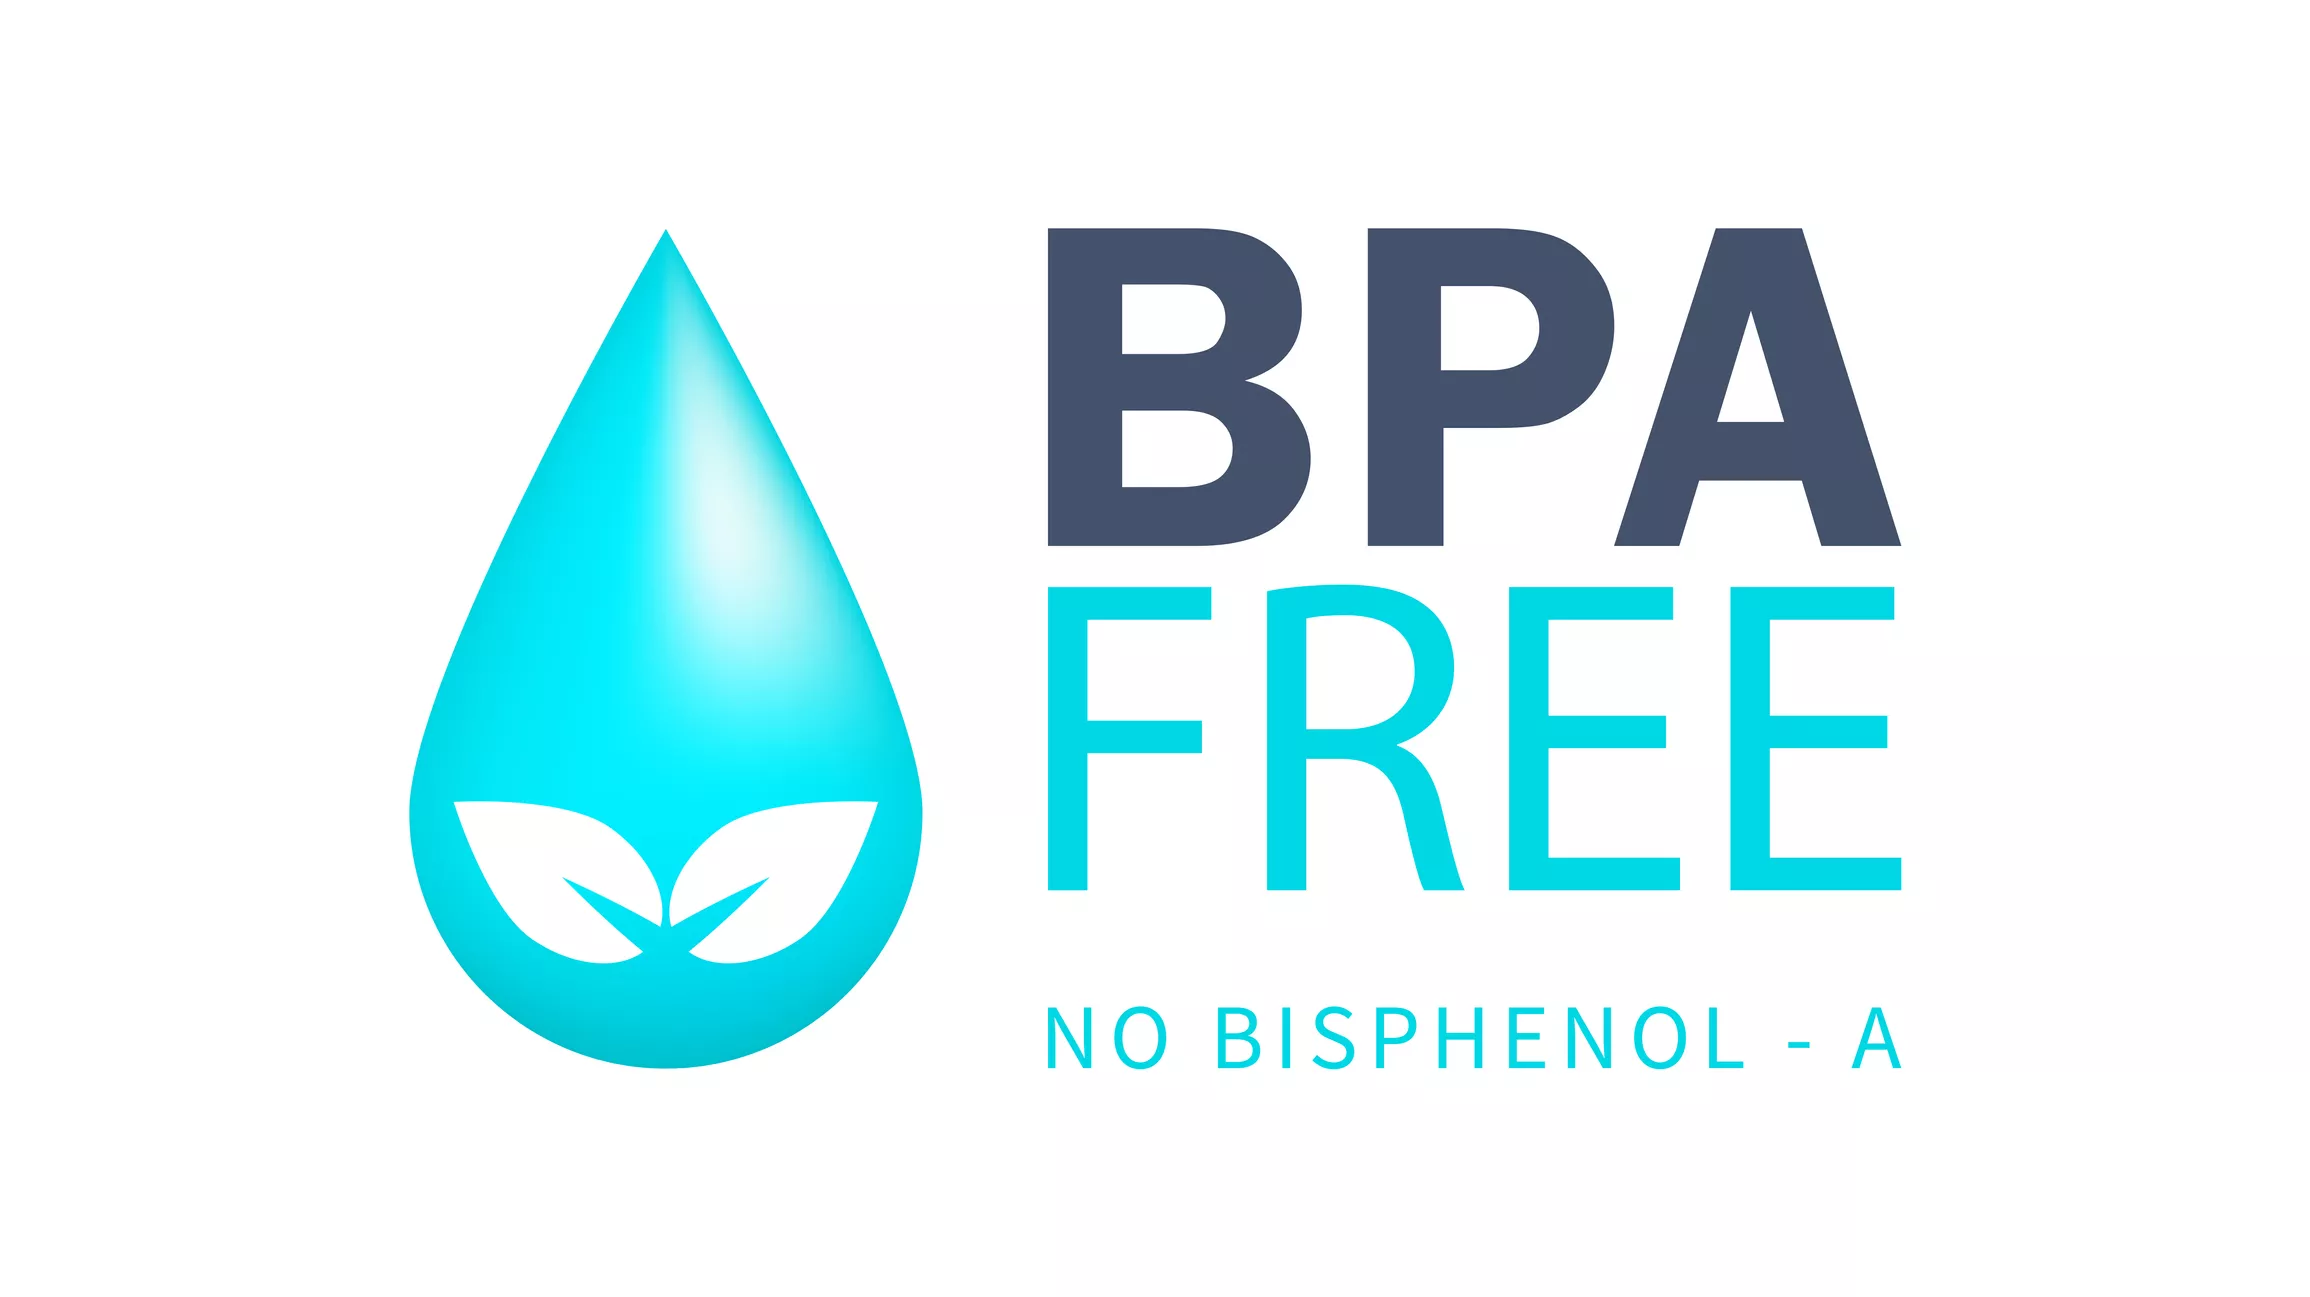 Generic BPA free label